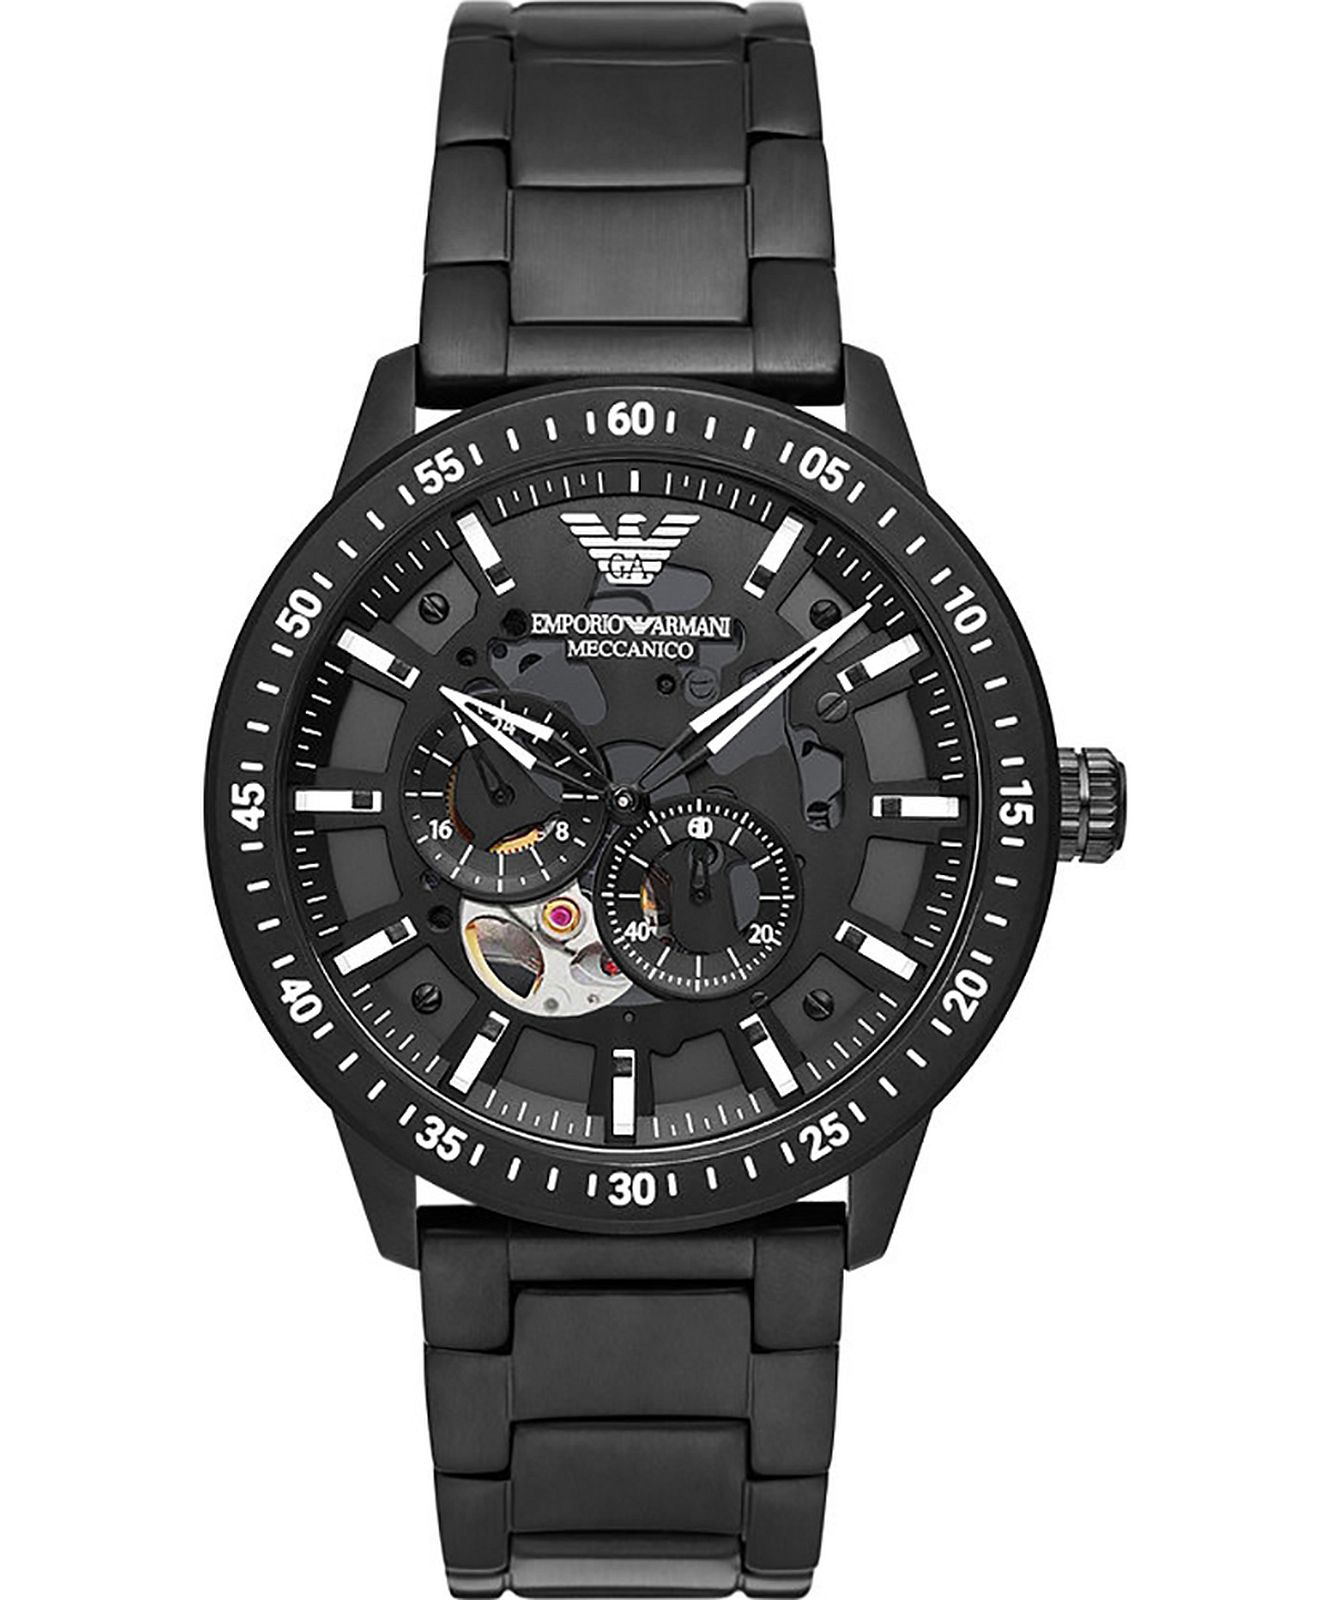 Emporio Armani AR60054 - Mario Meccanico Chronograph Watch • Watchard.com